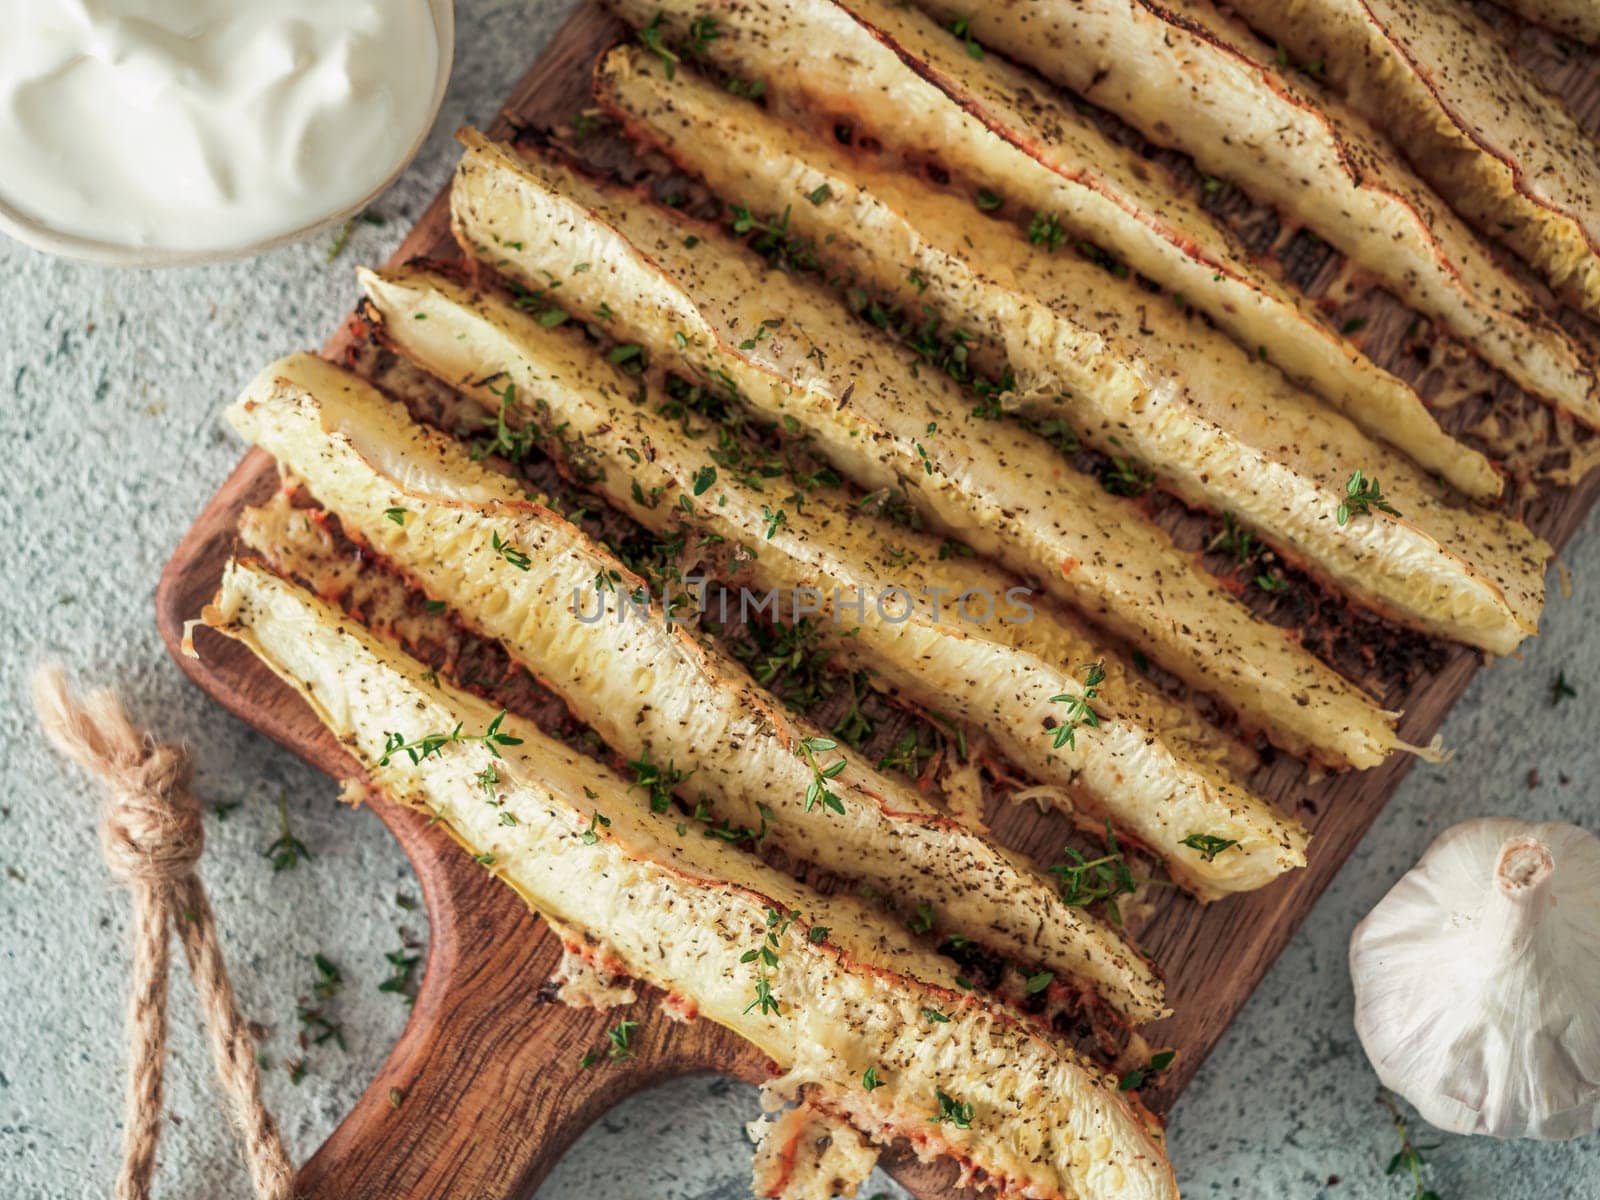 Baked Parmesan Garlic Zucchini by fascinadora